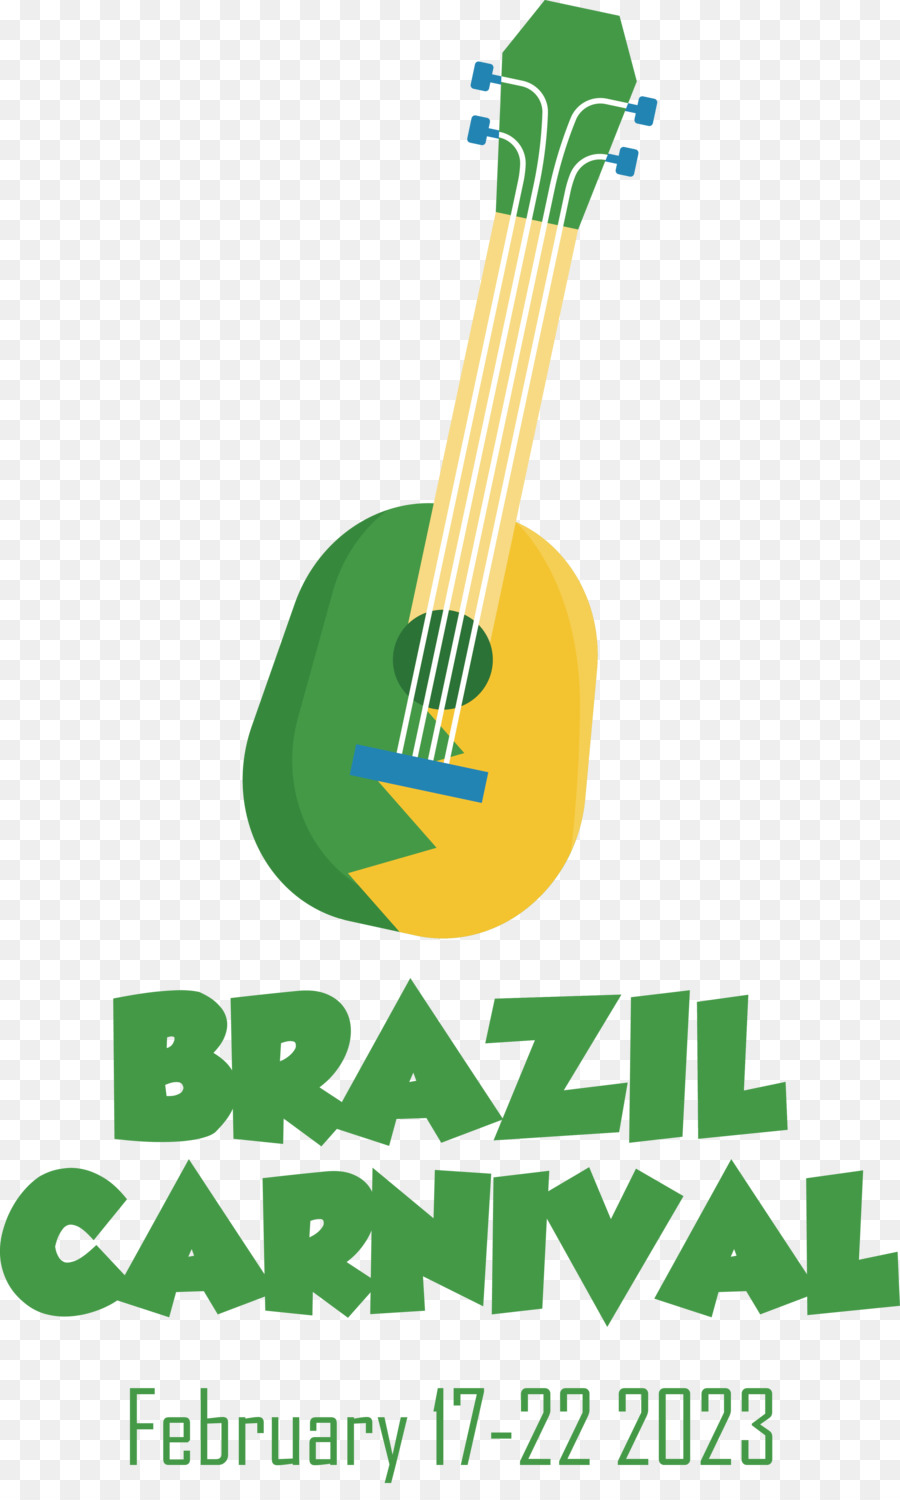 Glücklicher brasilianischer Karneval brasilianischer Karneval - 